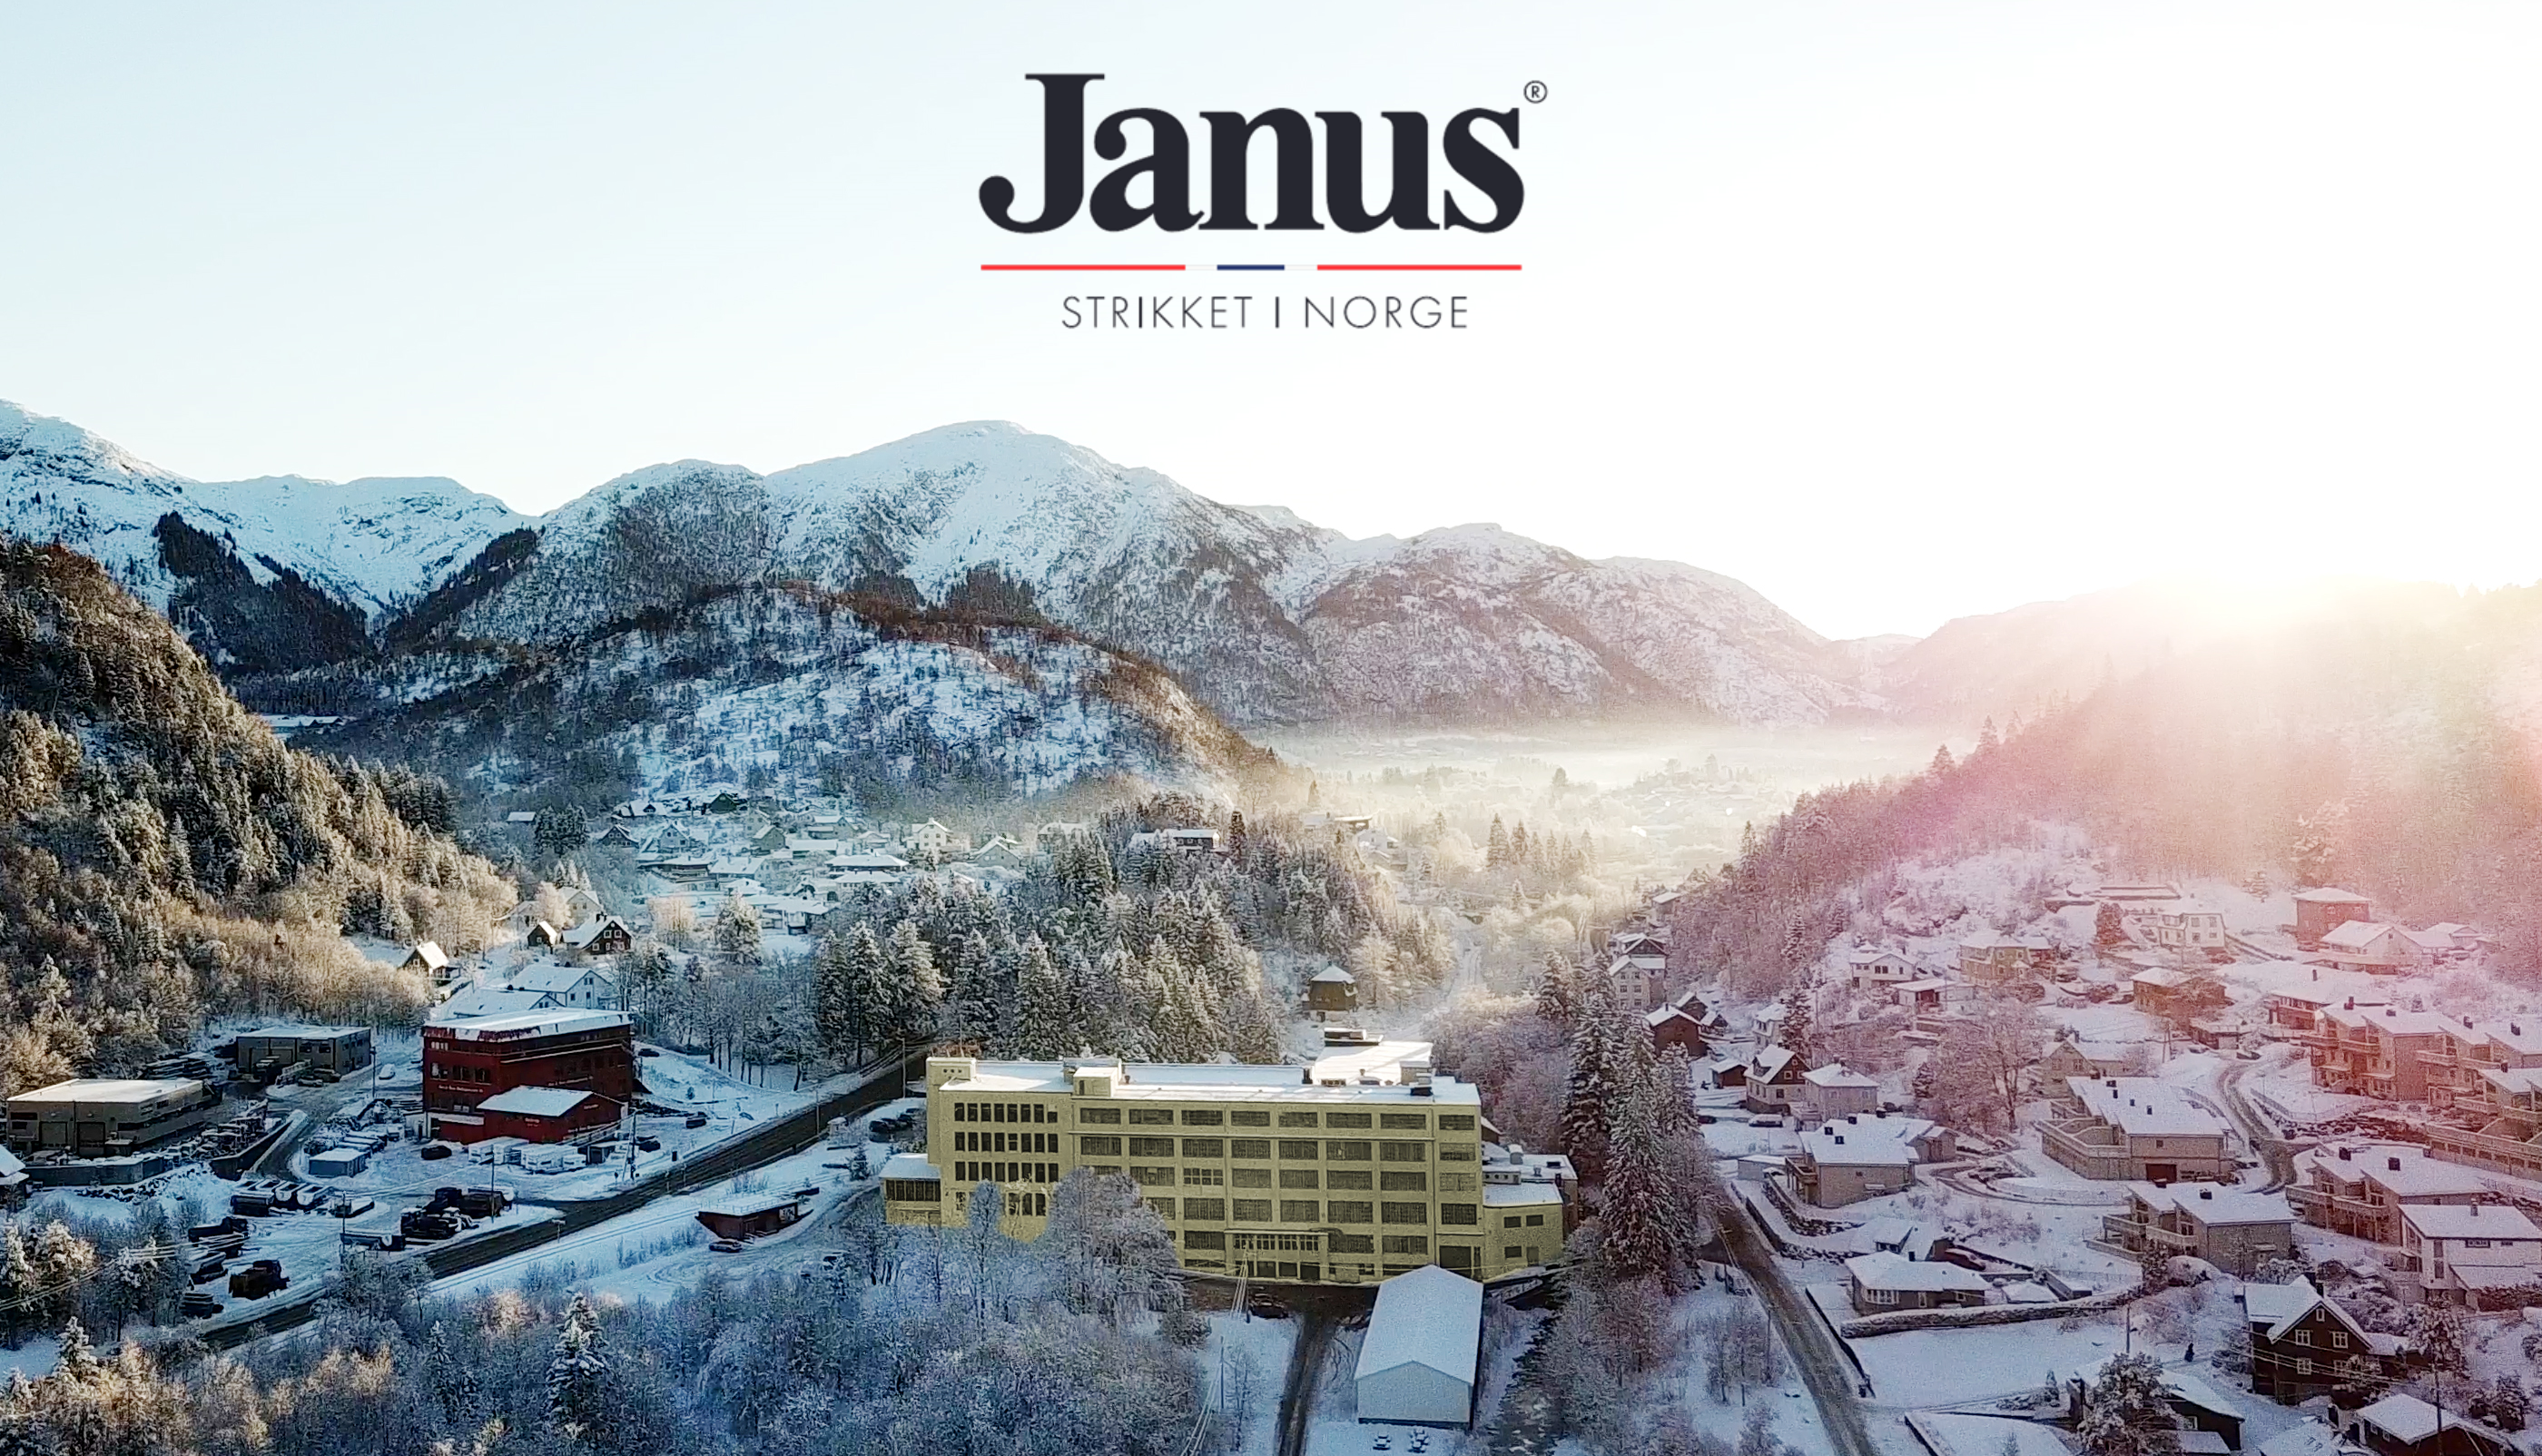 Janus factory with logo